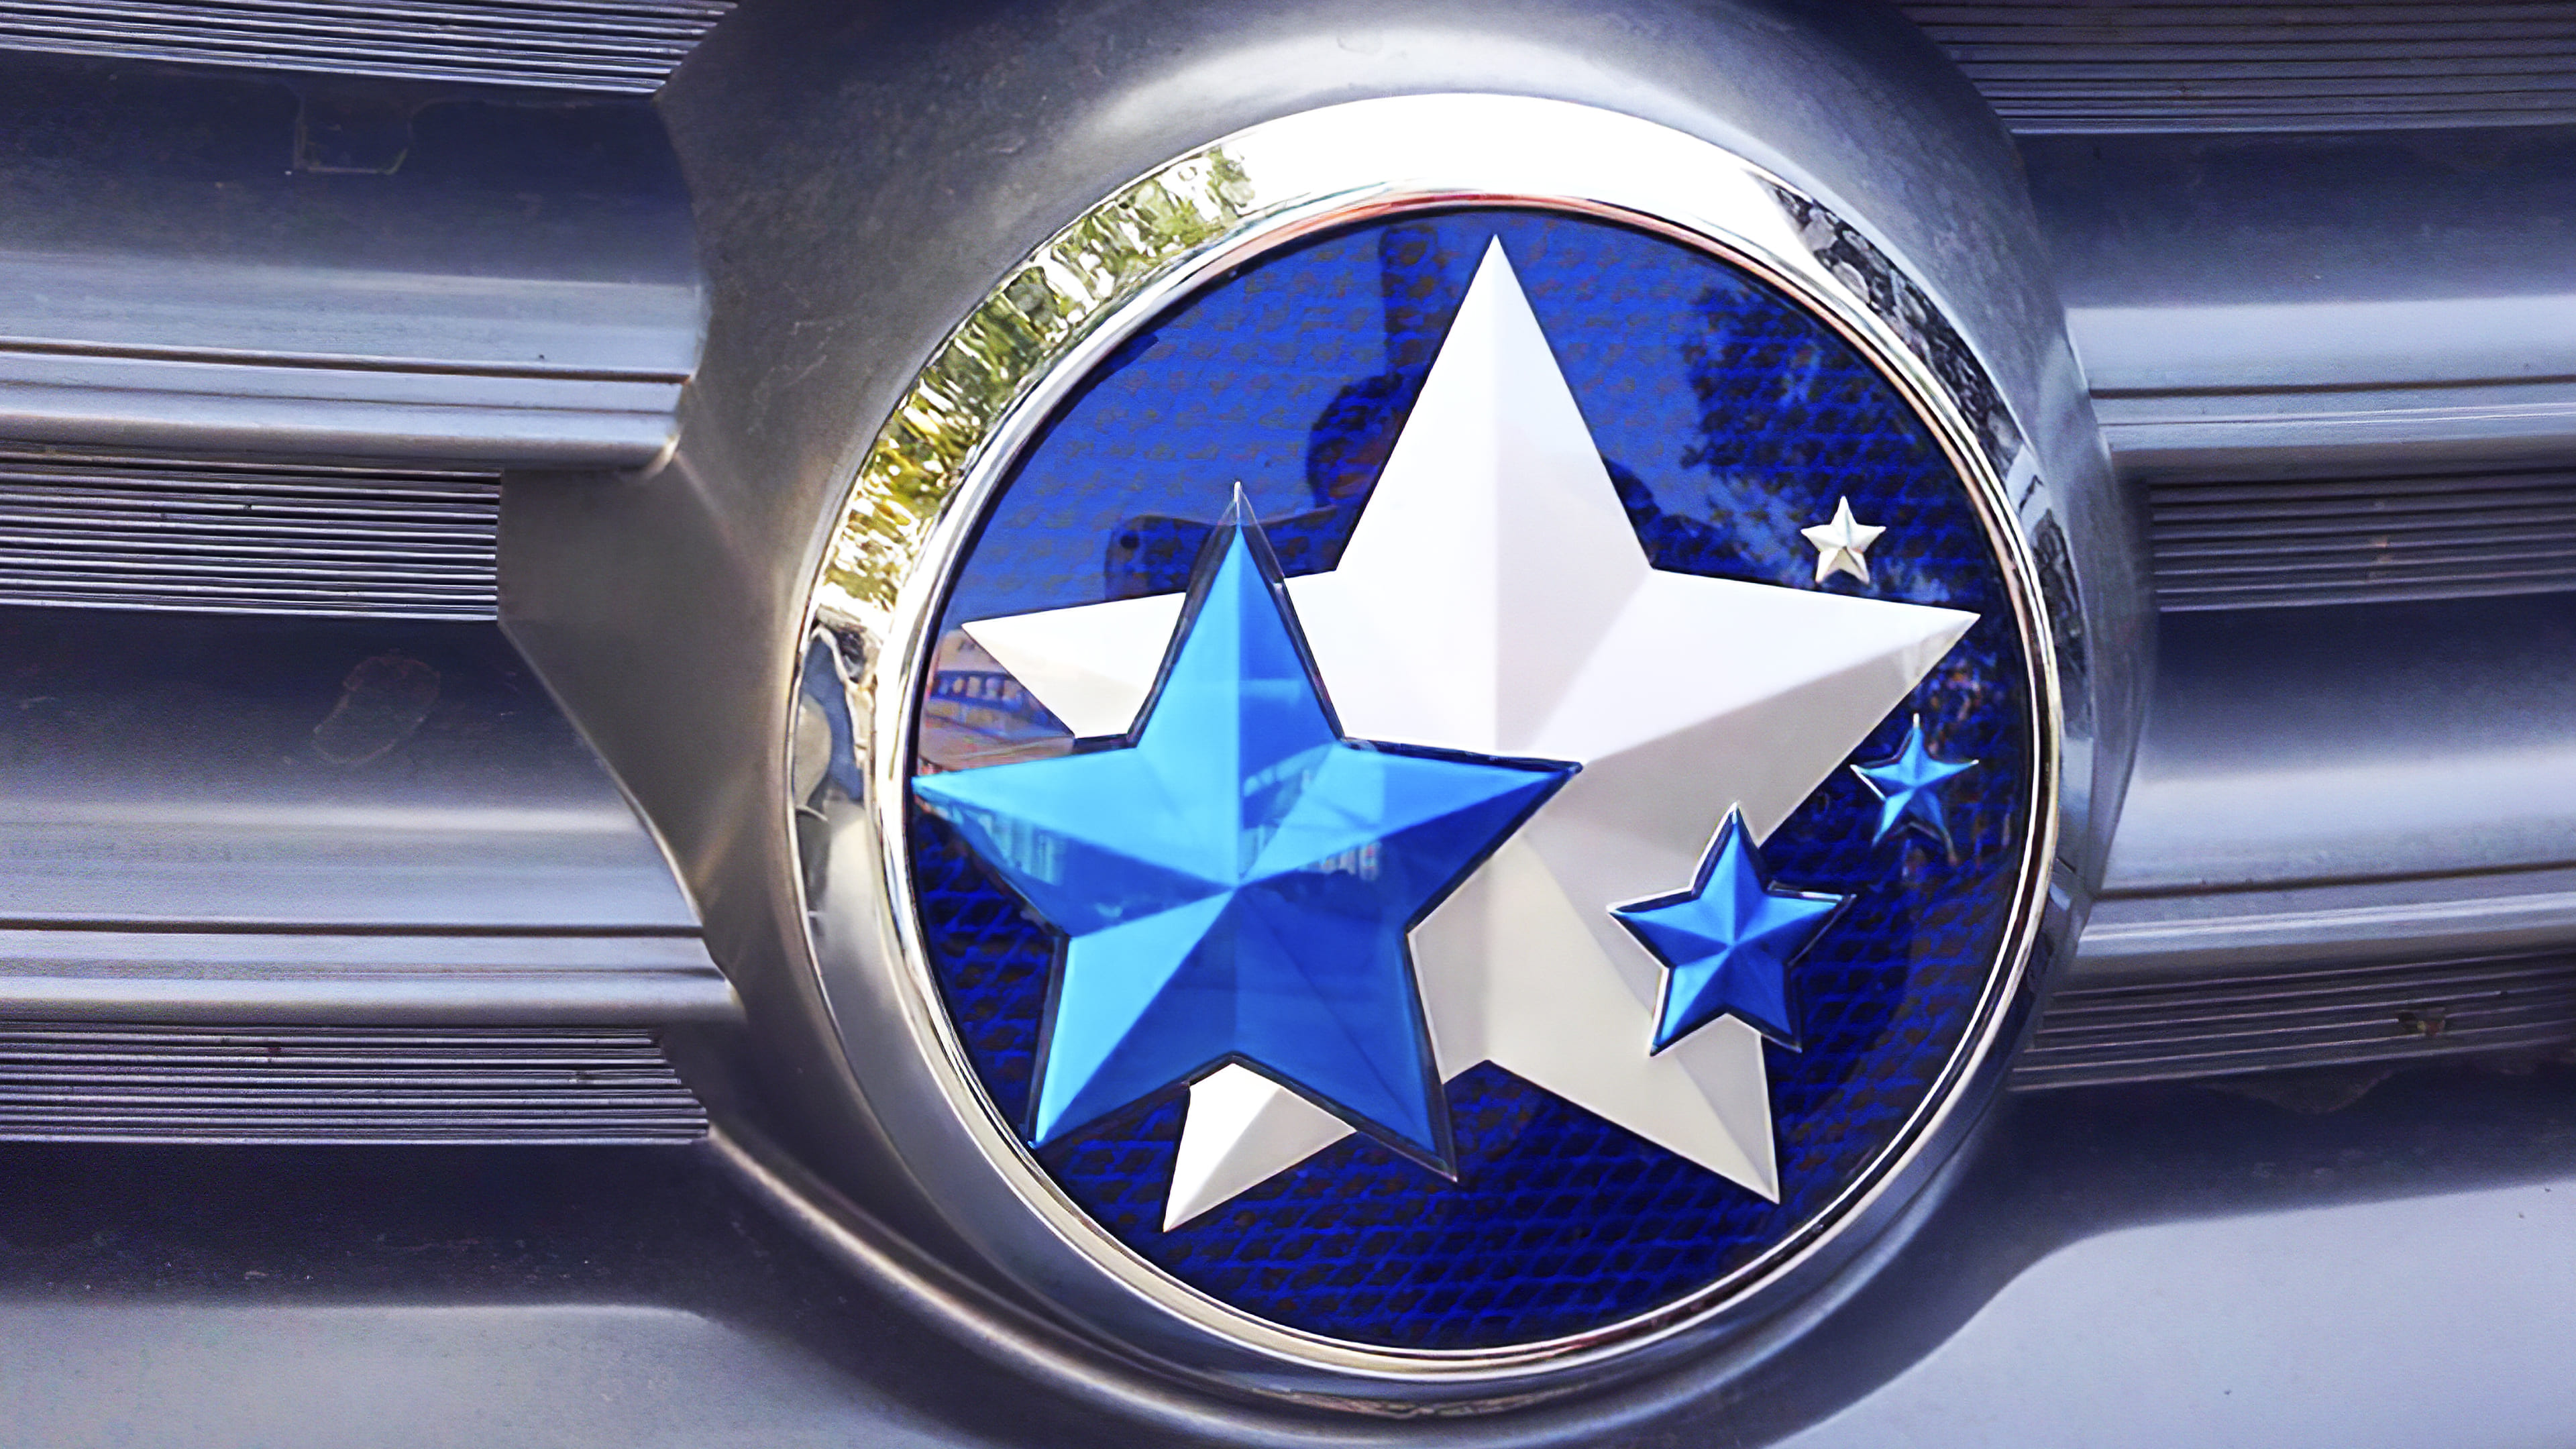 blue star logo designs